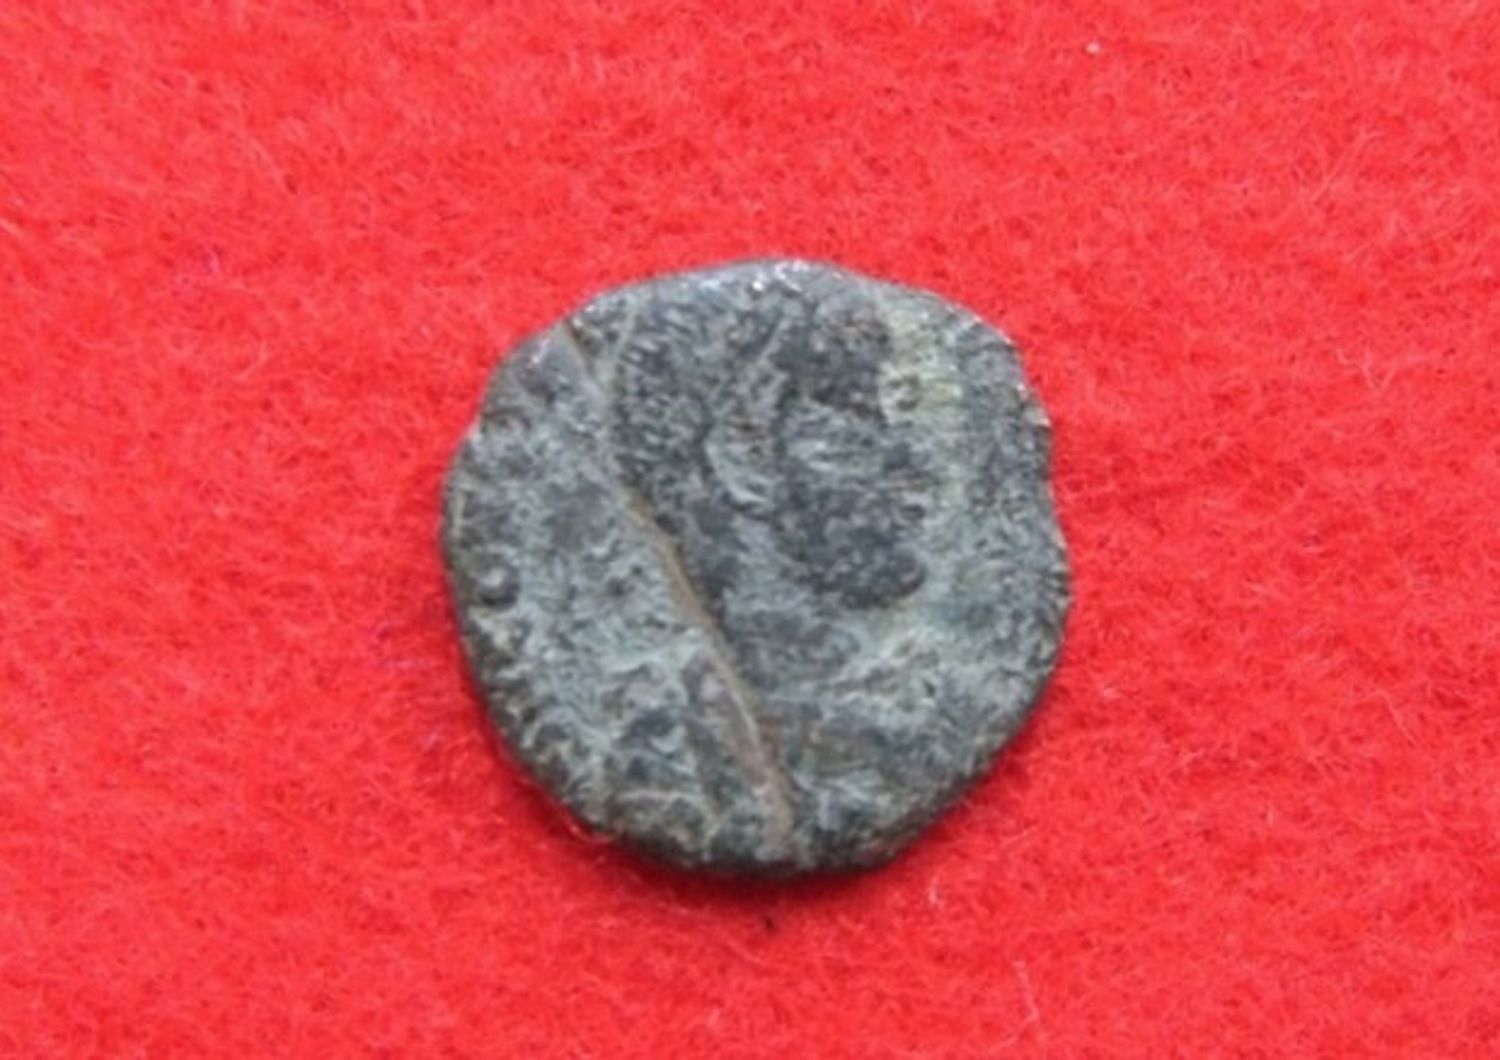 antica moneta romana&nbsp;